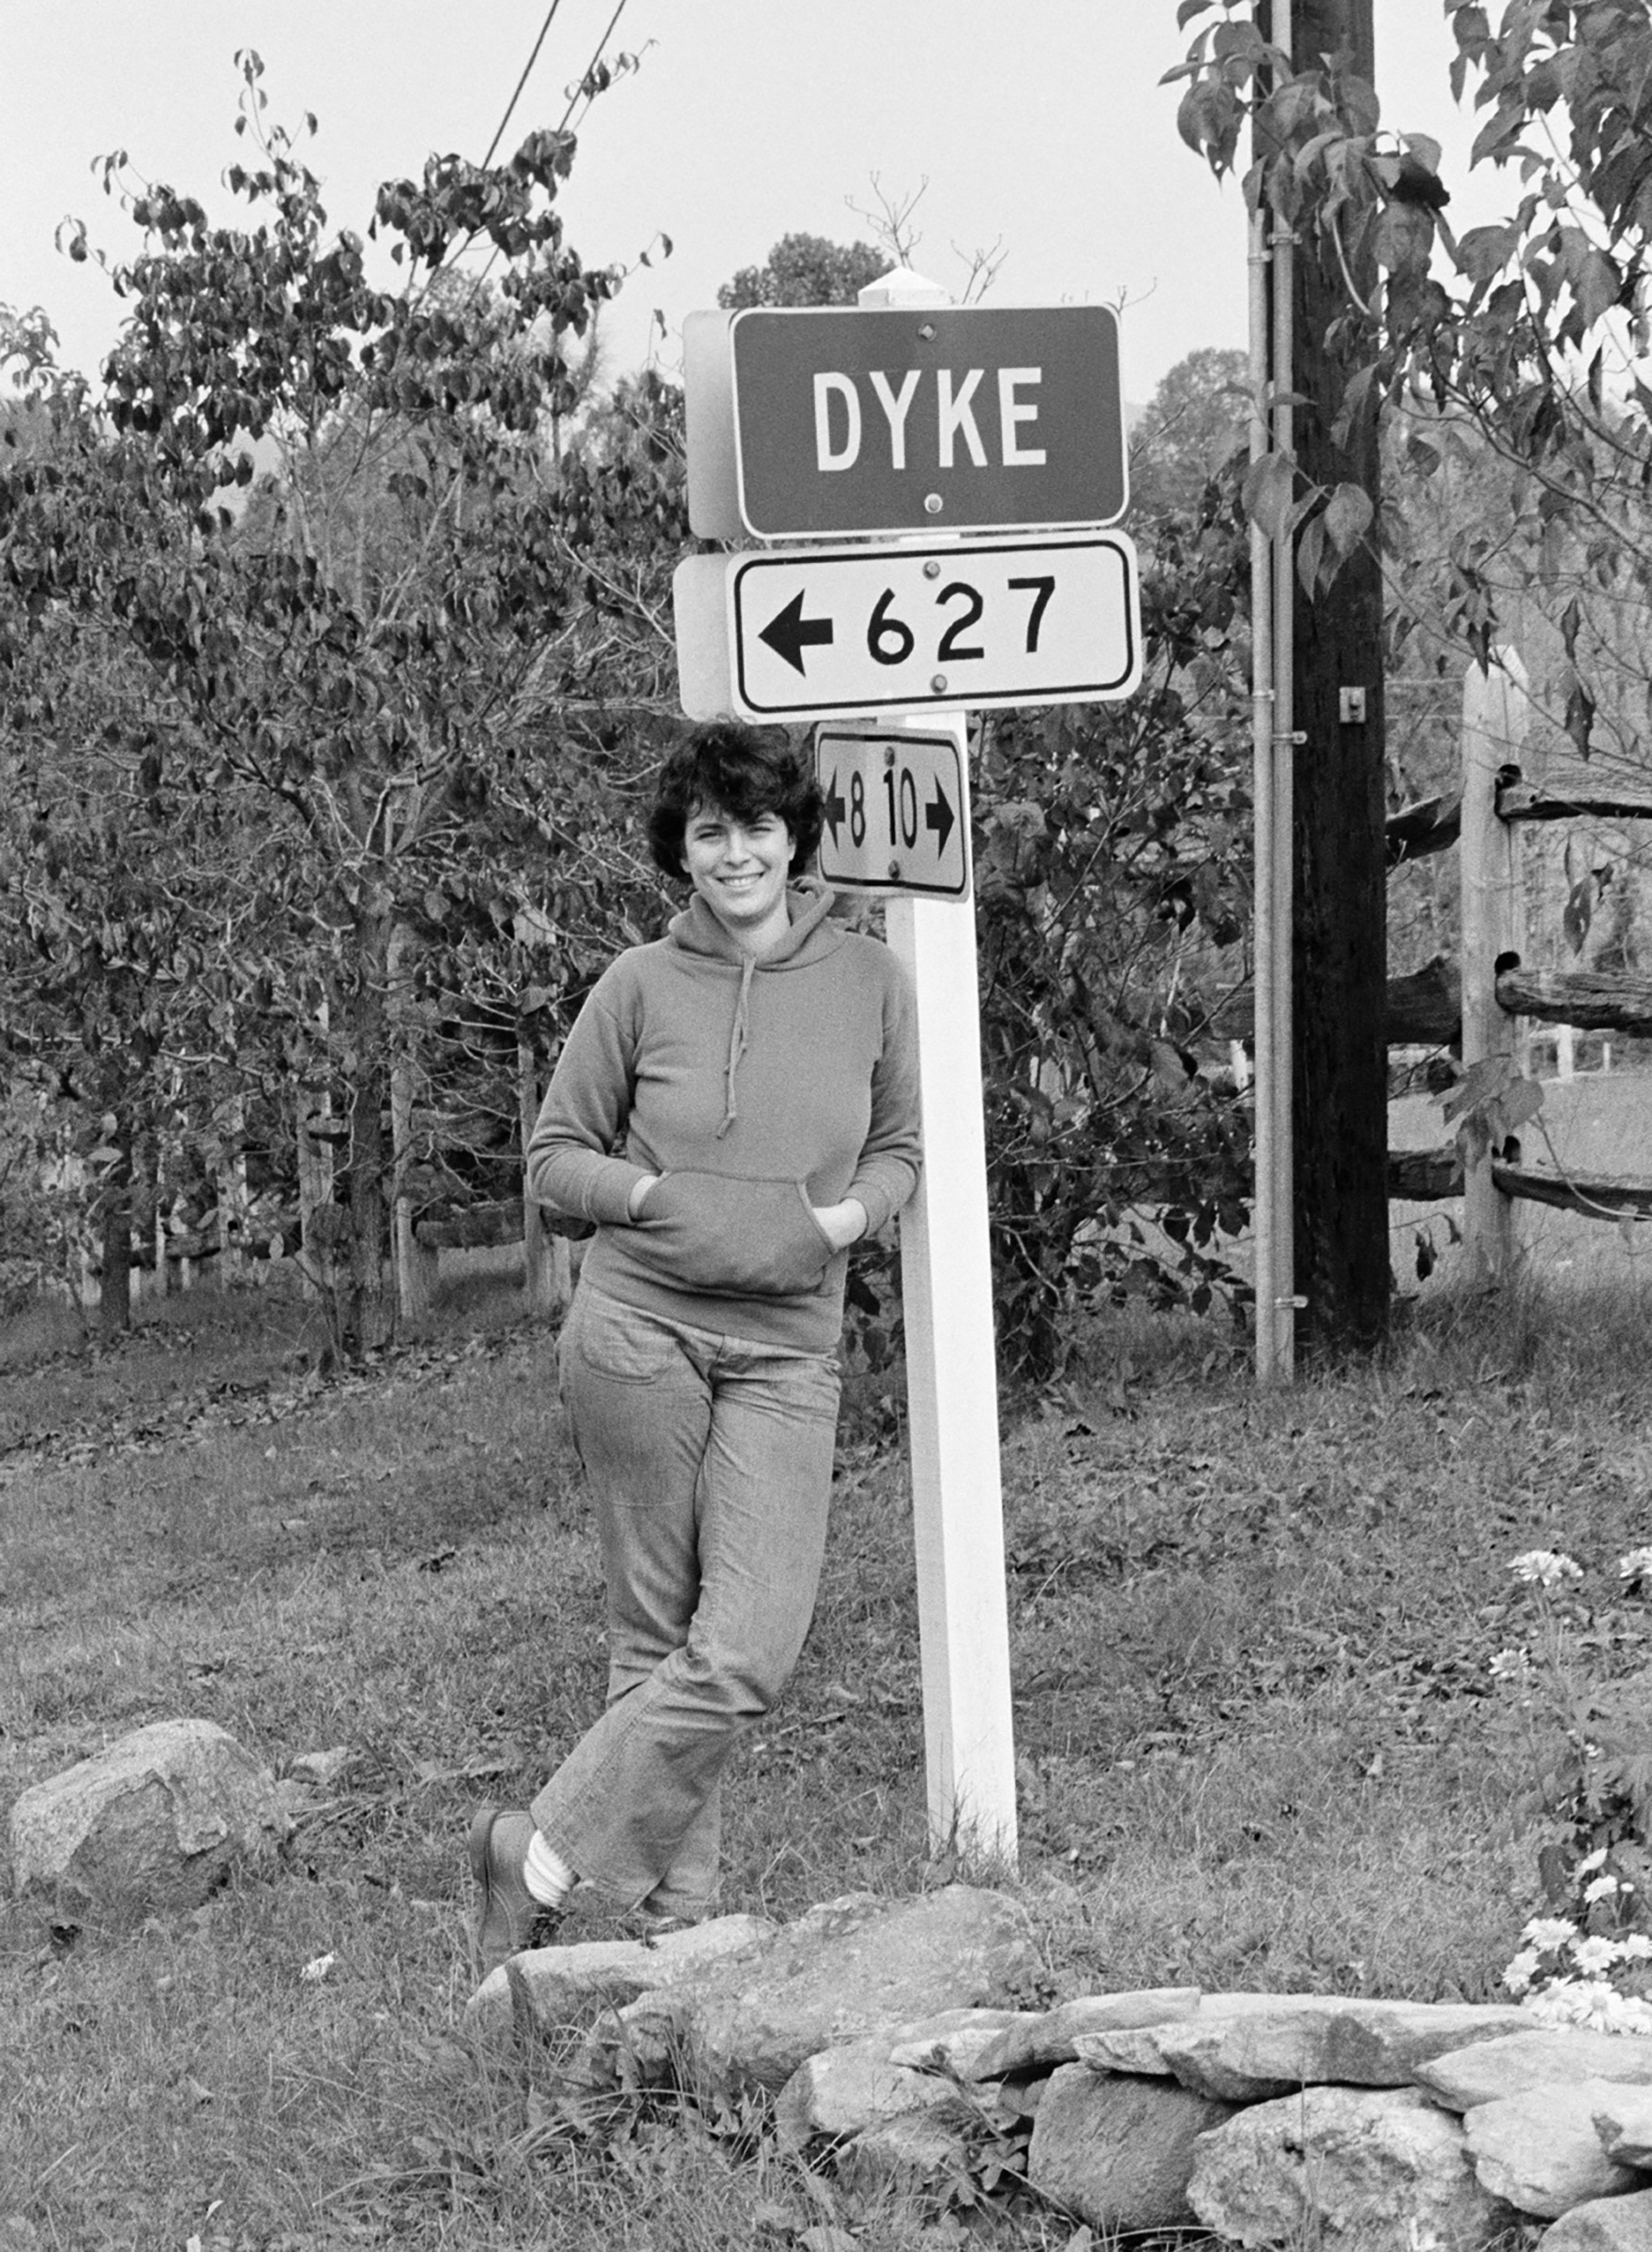 JEB. Dyke, Virginia. 1975 (JEB (Joan E. Biren))